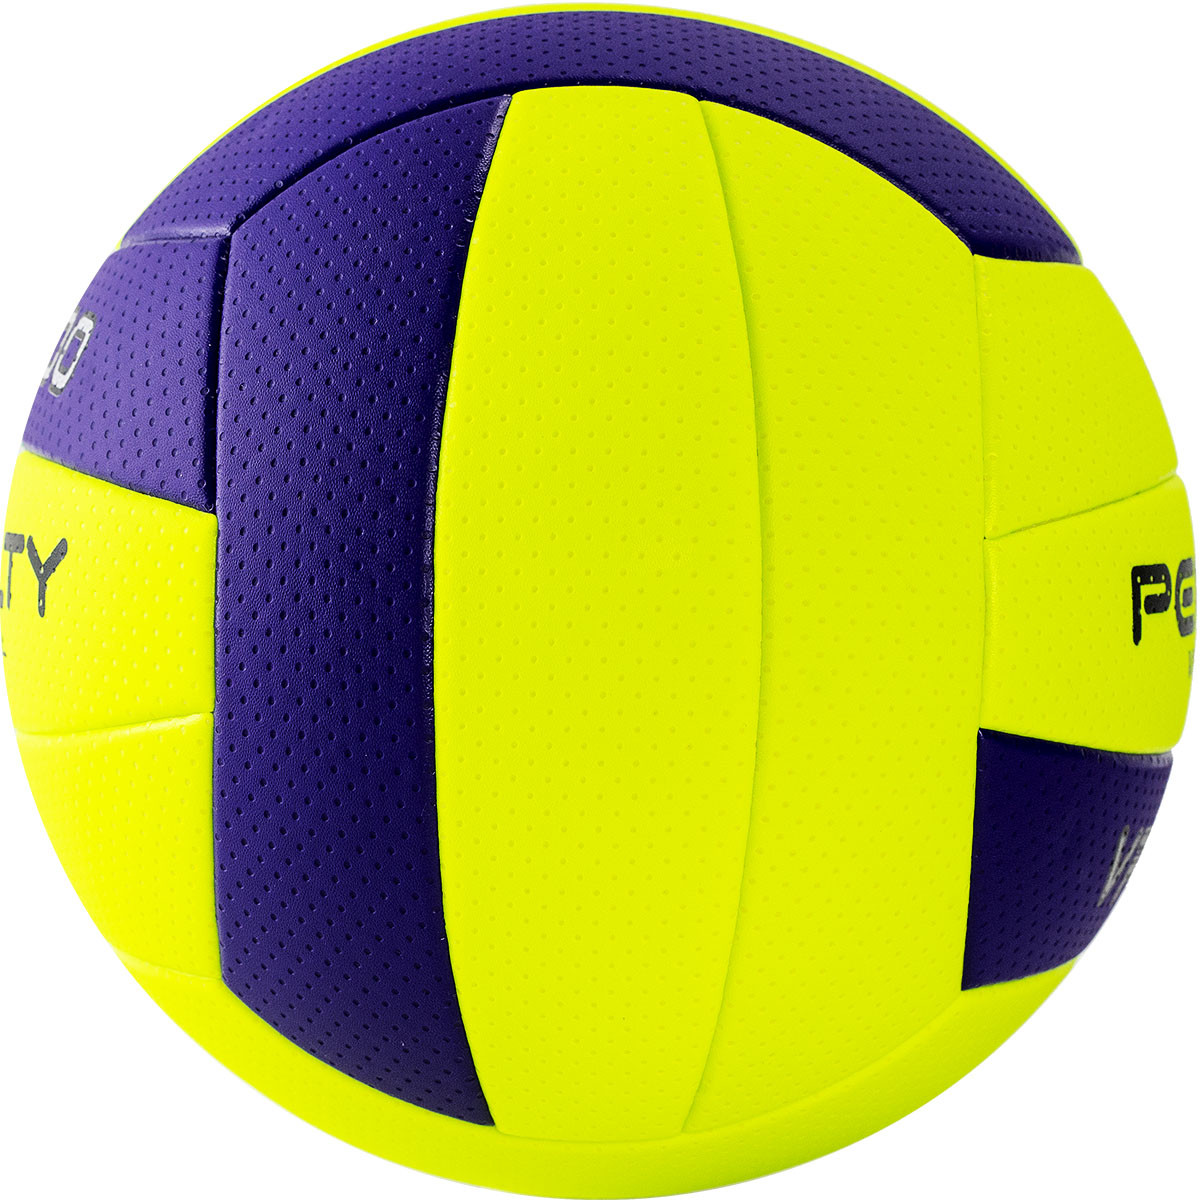 Мяч вол. PENALTY BOLA VOLEI VP 5000 X, арт.5212712420-U, р.5, PU, термосшивка, желт-фиол